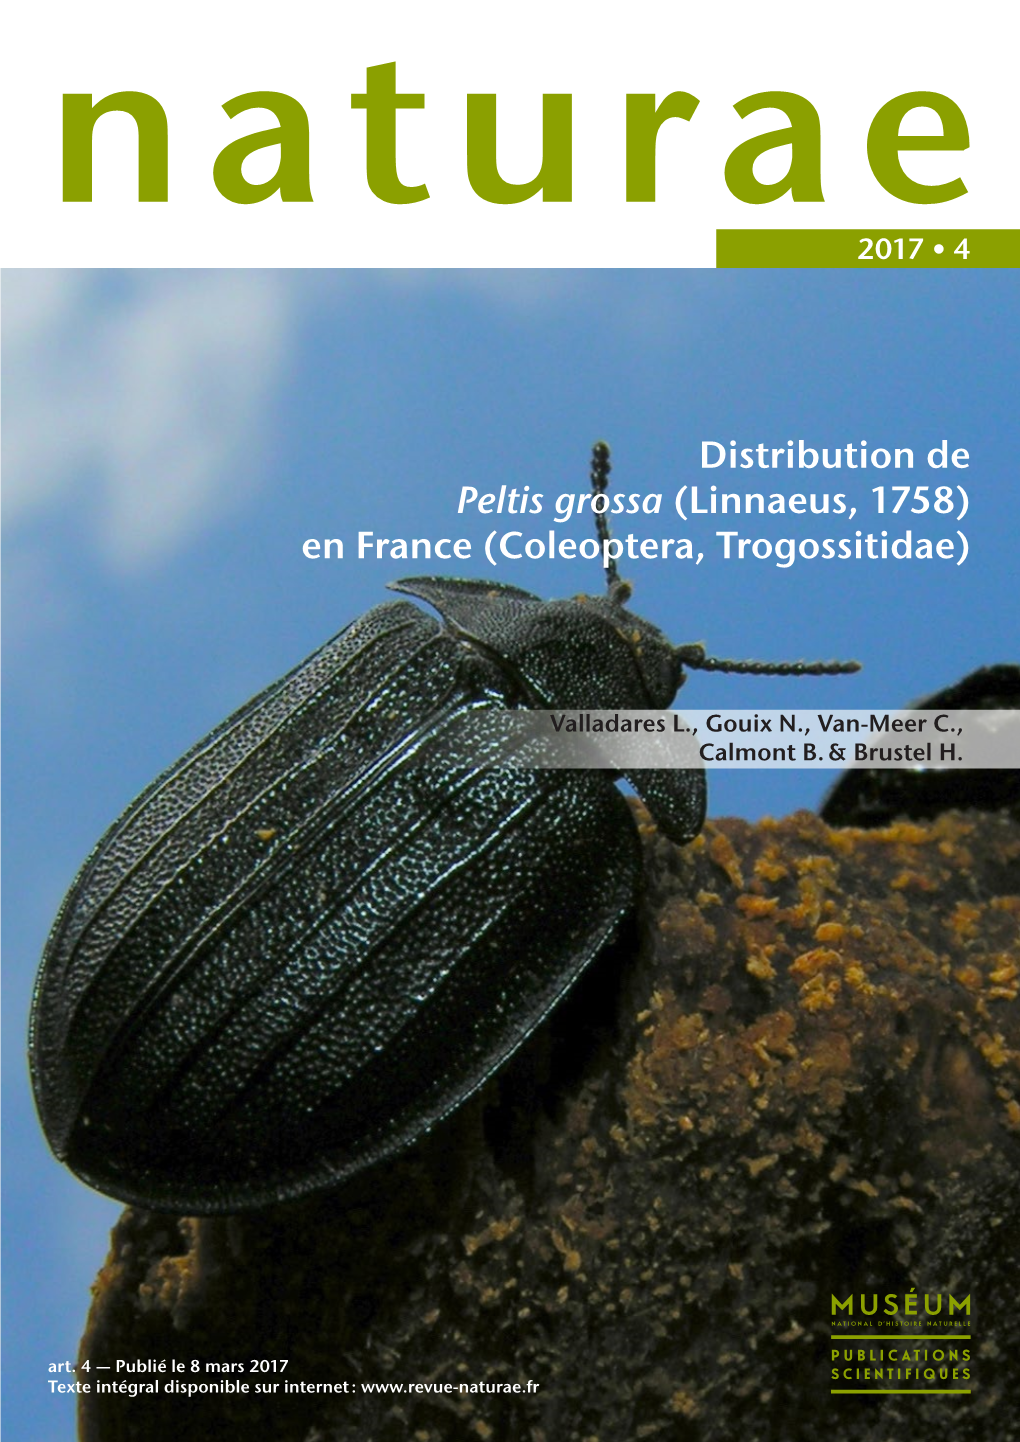 Distribution De Peltis Grossa (Linnaeus, 1758) En France (Coleoptera, Trogossitidae)